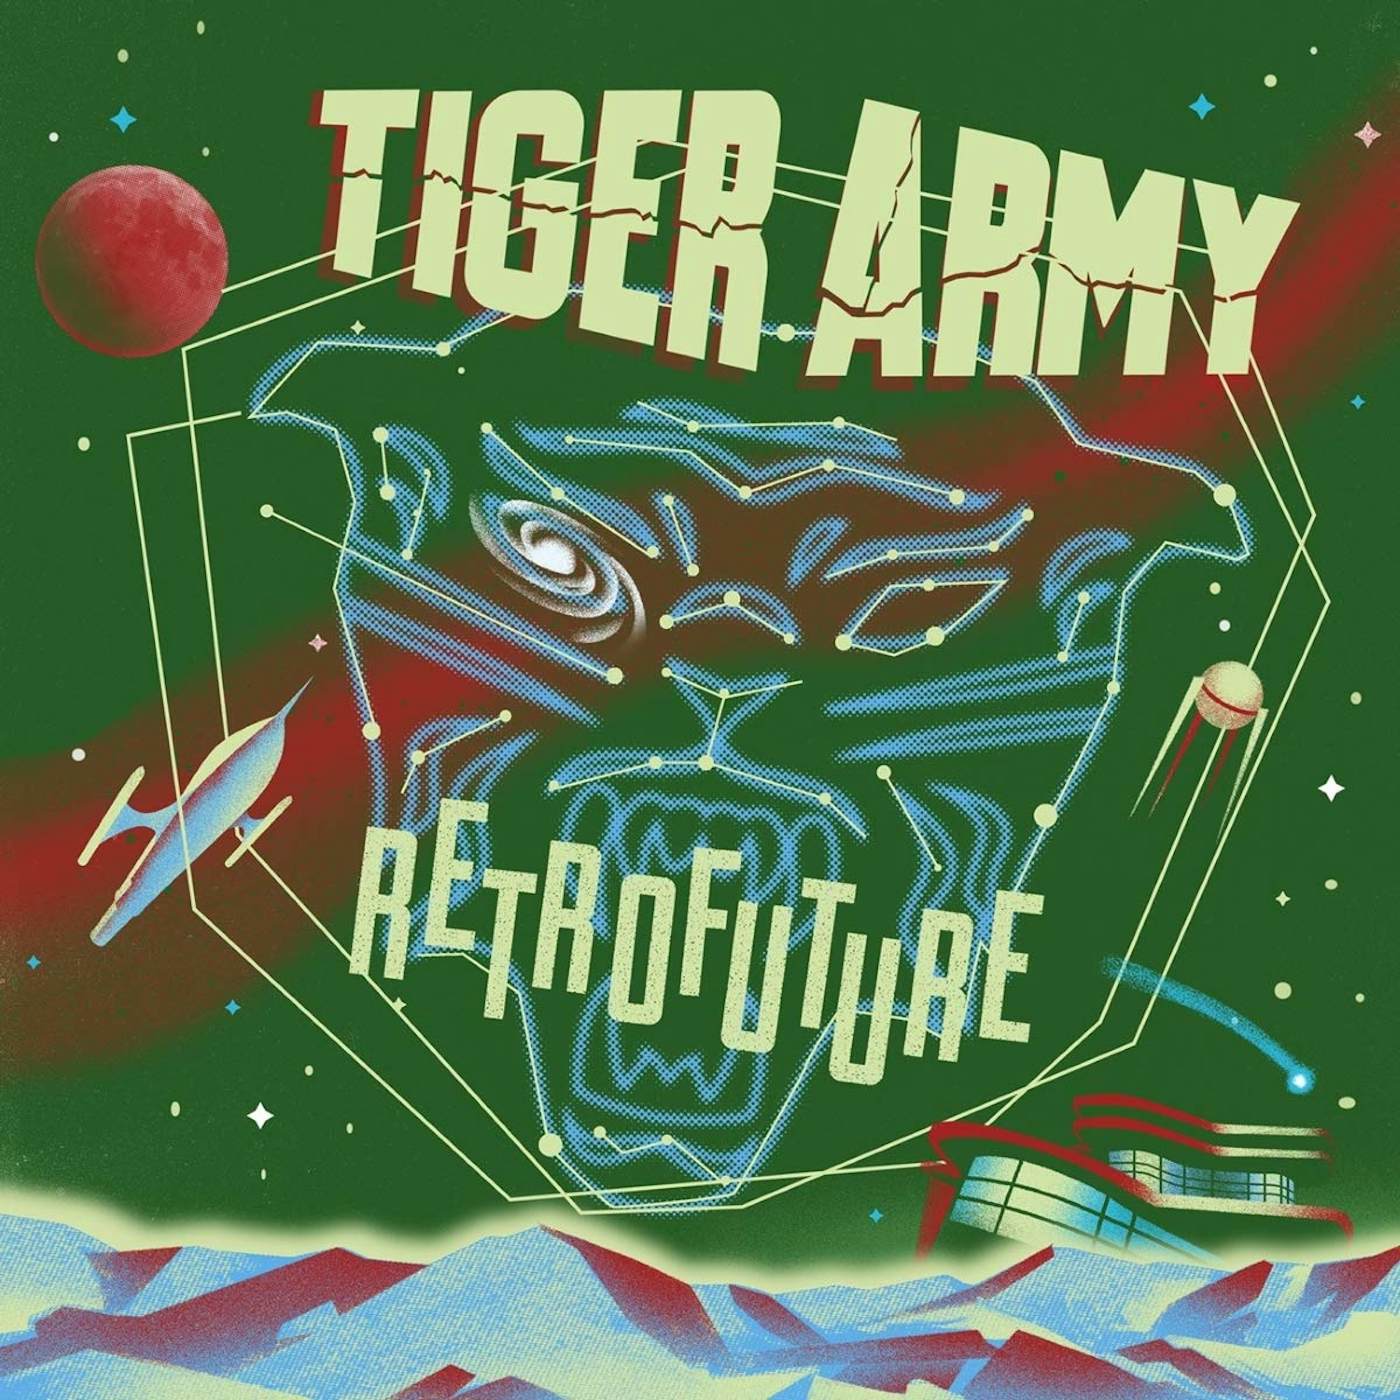 Tiger Army Retrofuture CD